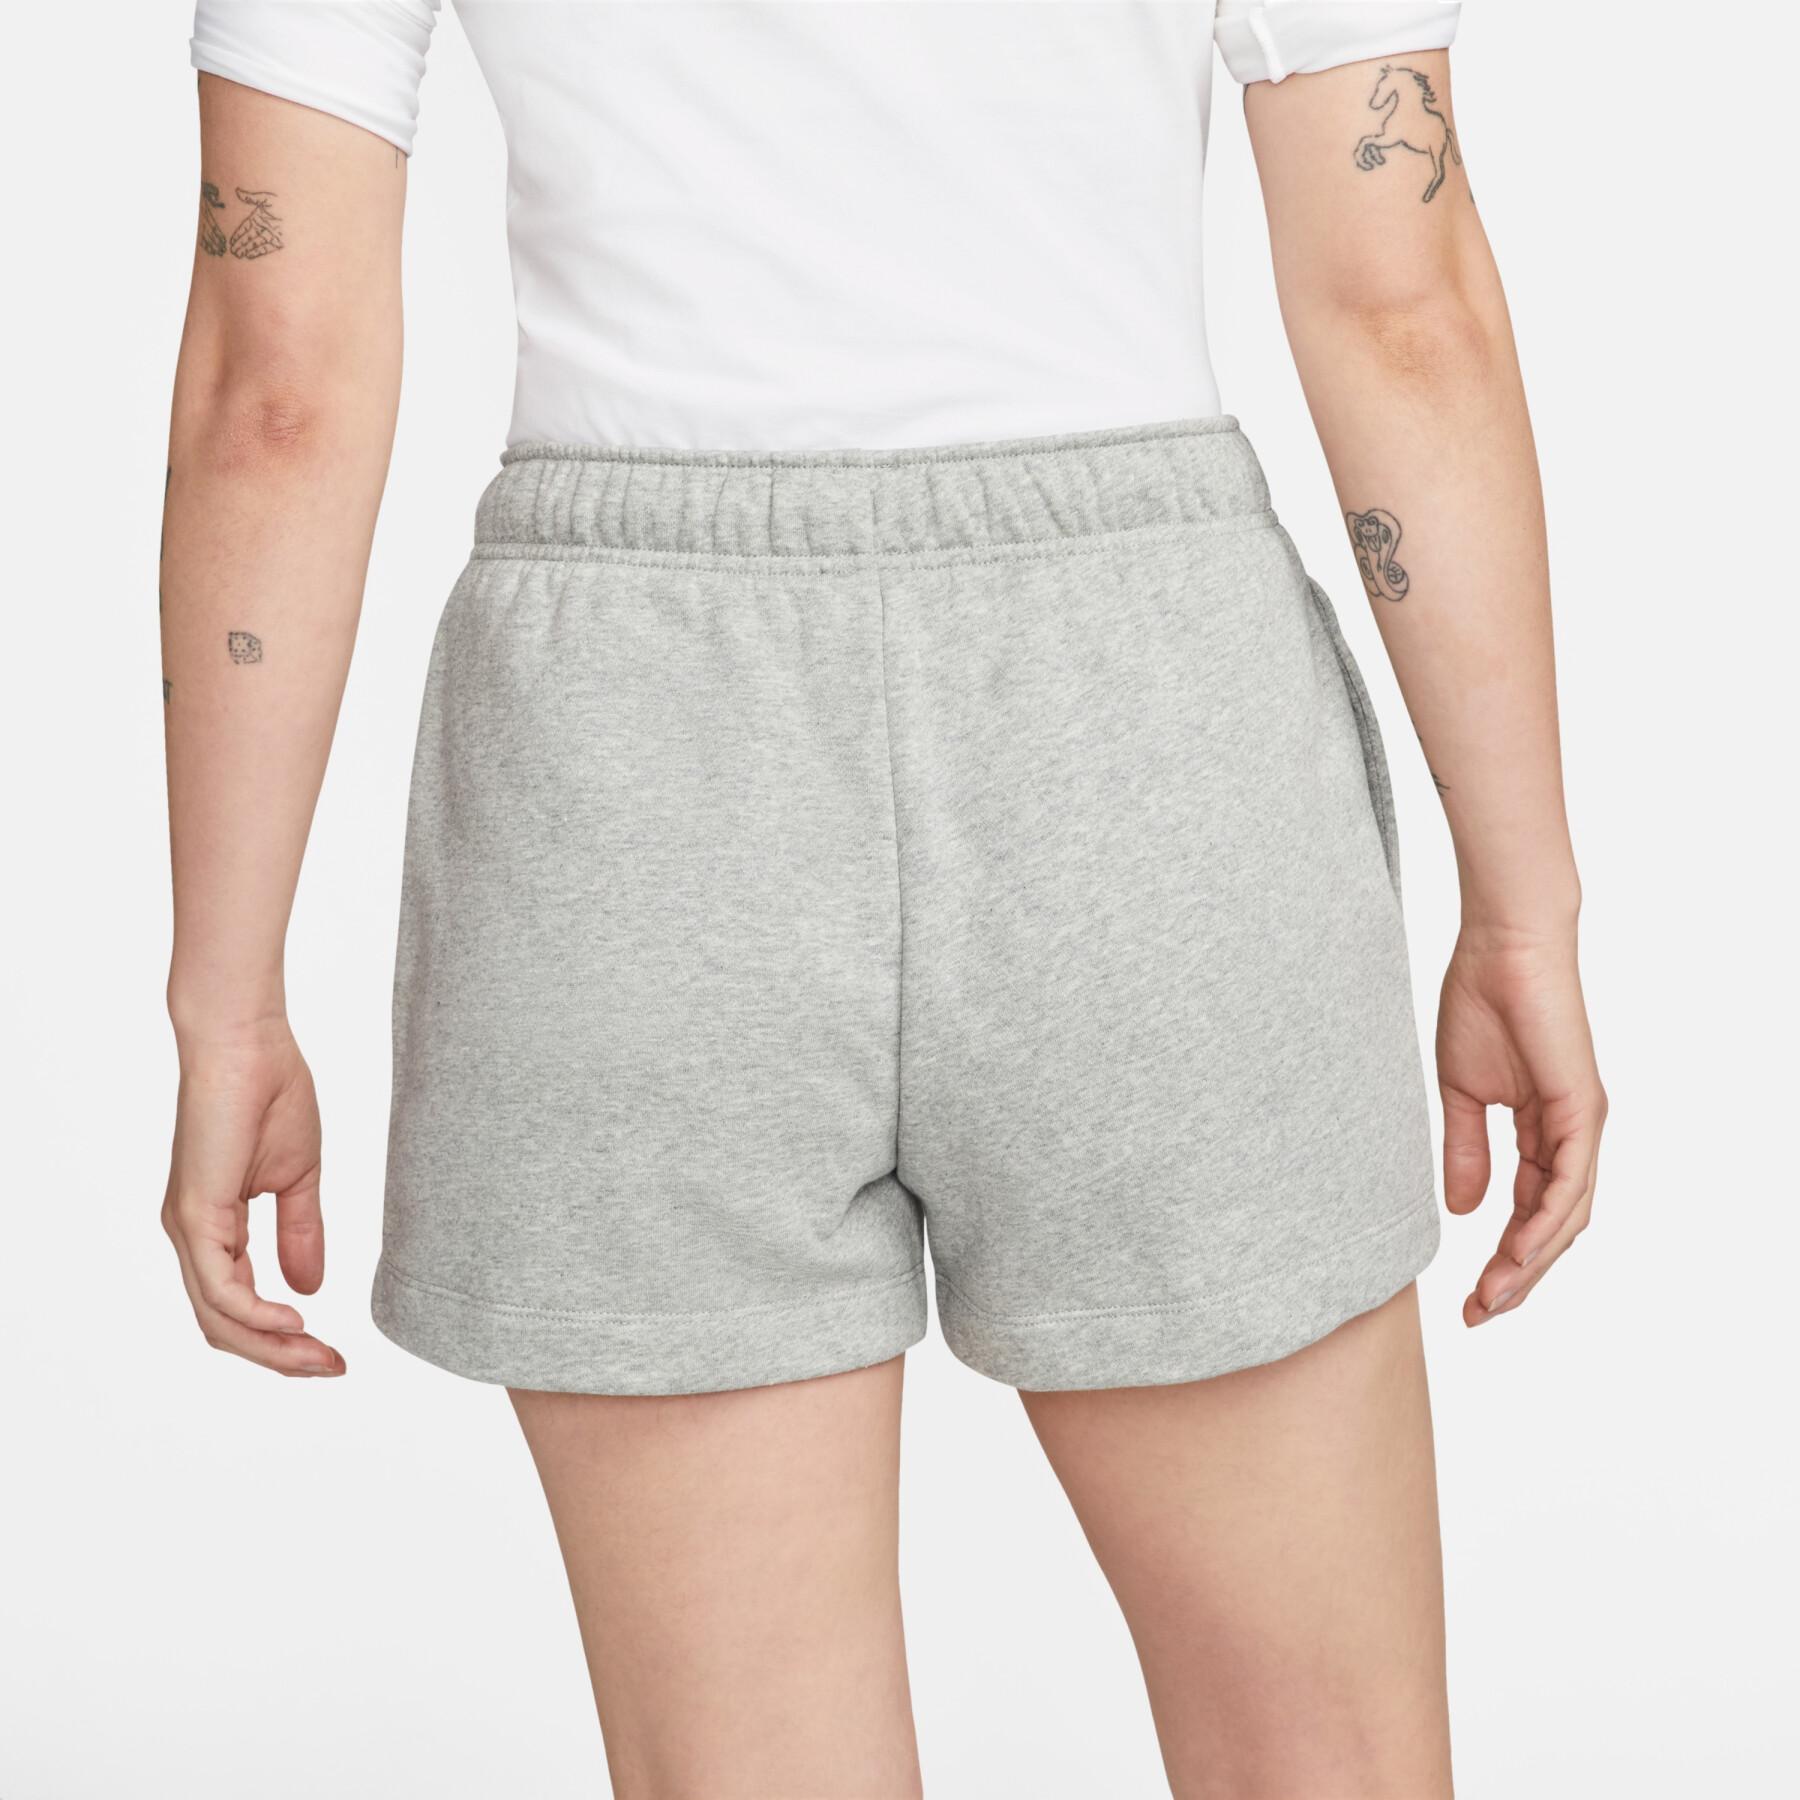 Pantalón corto de mujer Nike Sportswear Club MR